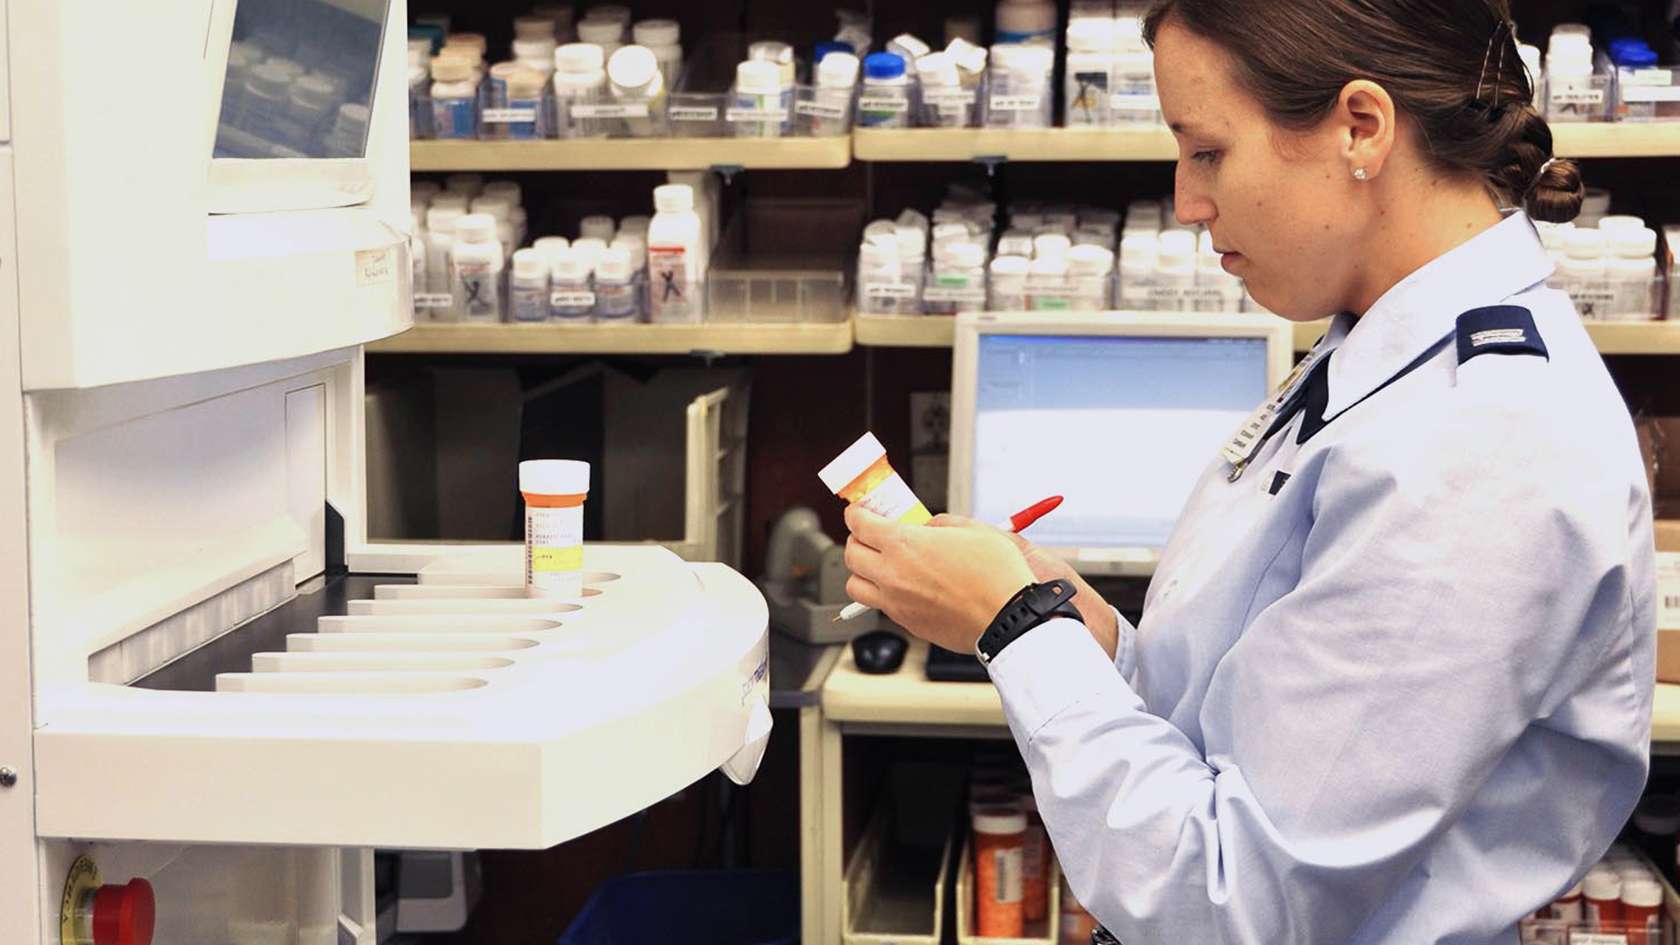 pharmacist inspecting patient's vial of meds